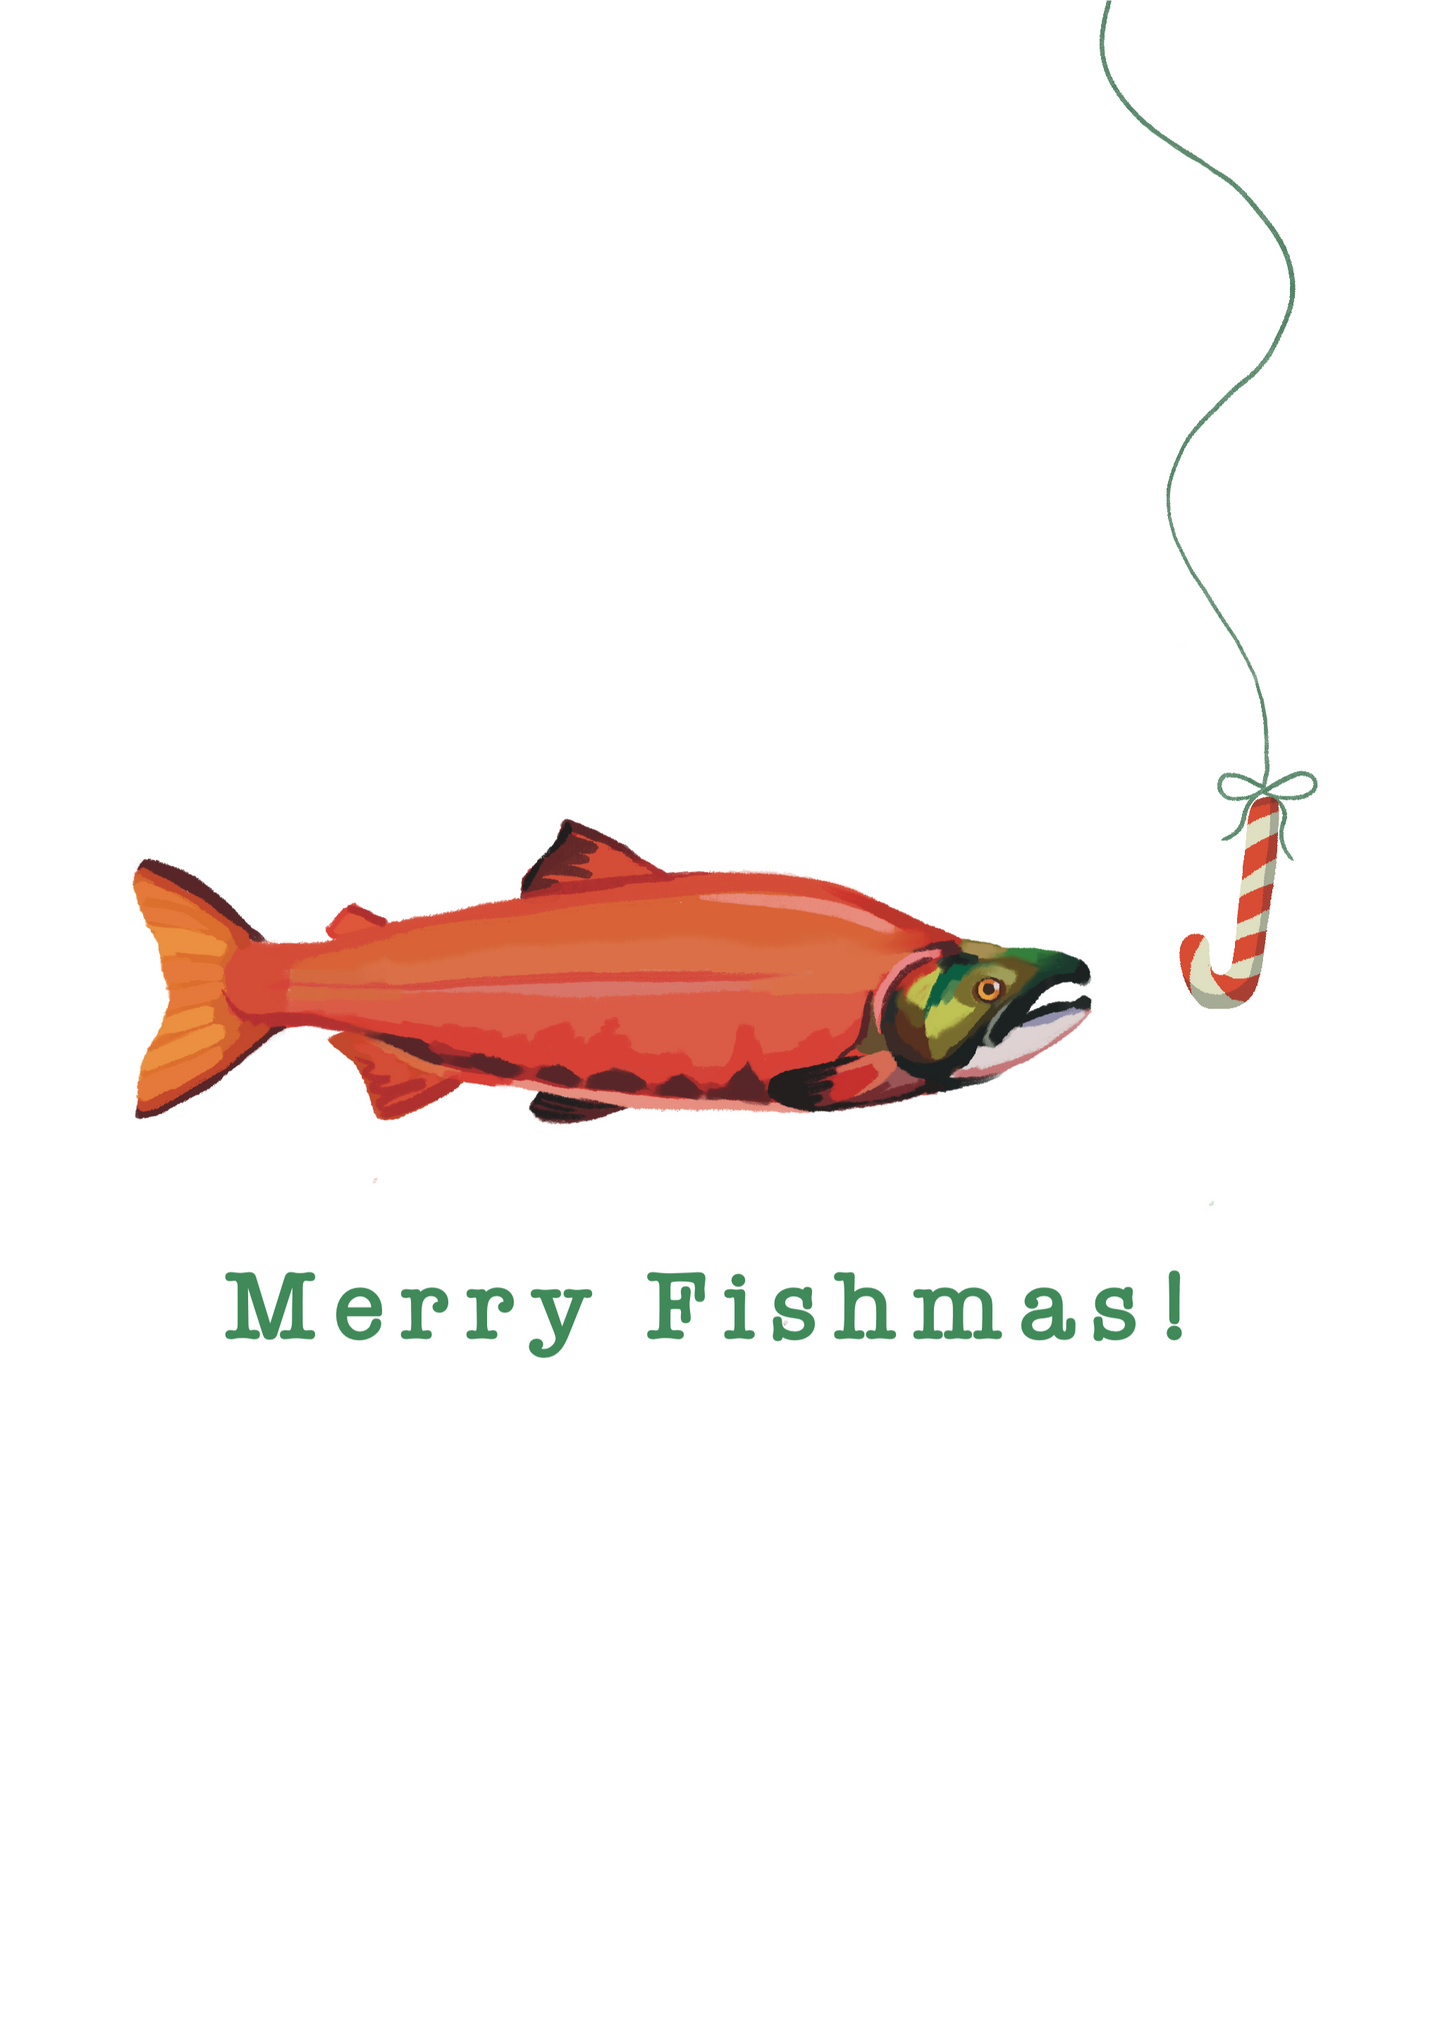 Merry Fishmas